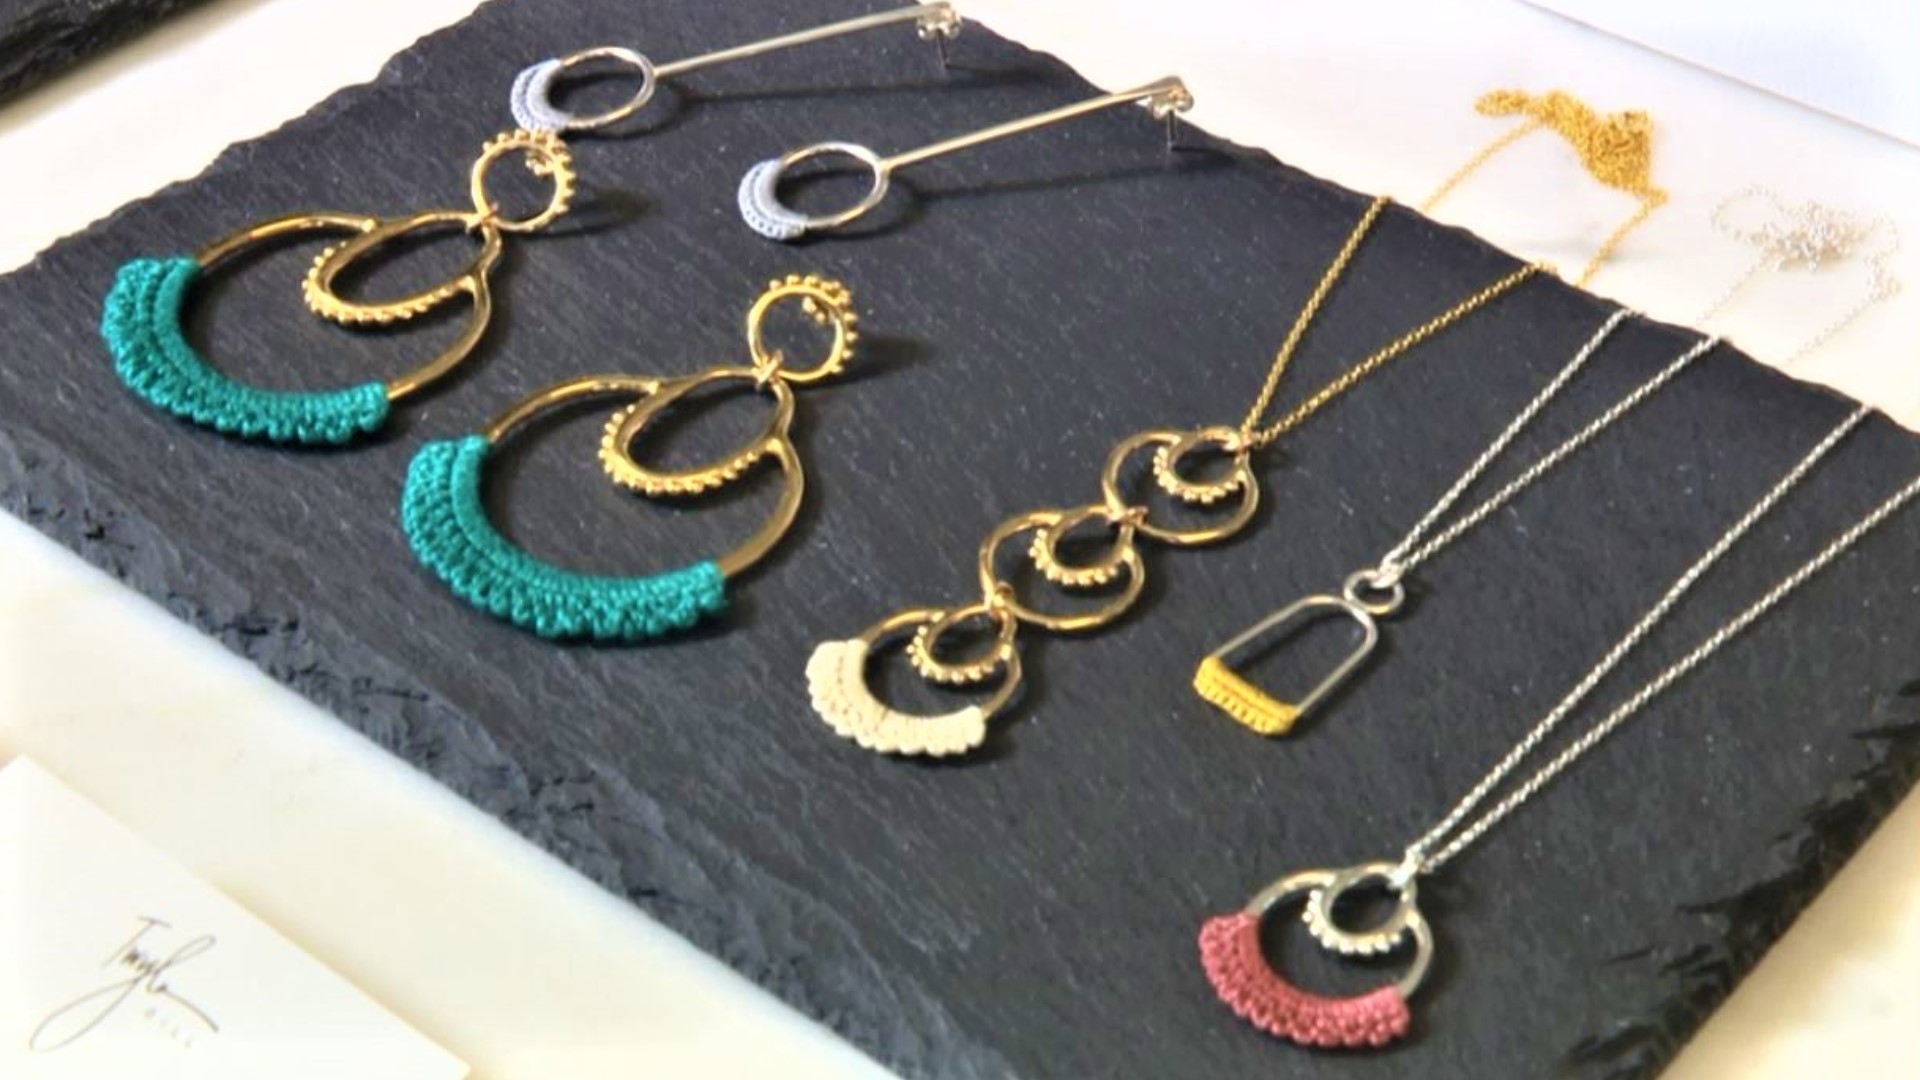 Designer Twyla Dill hand-crochets each piece of jewelry she sells. #k5evening